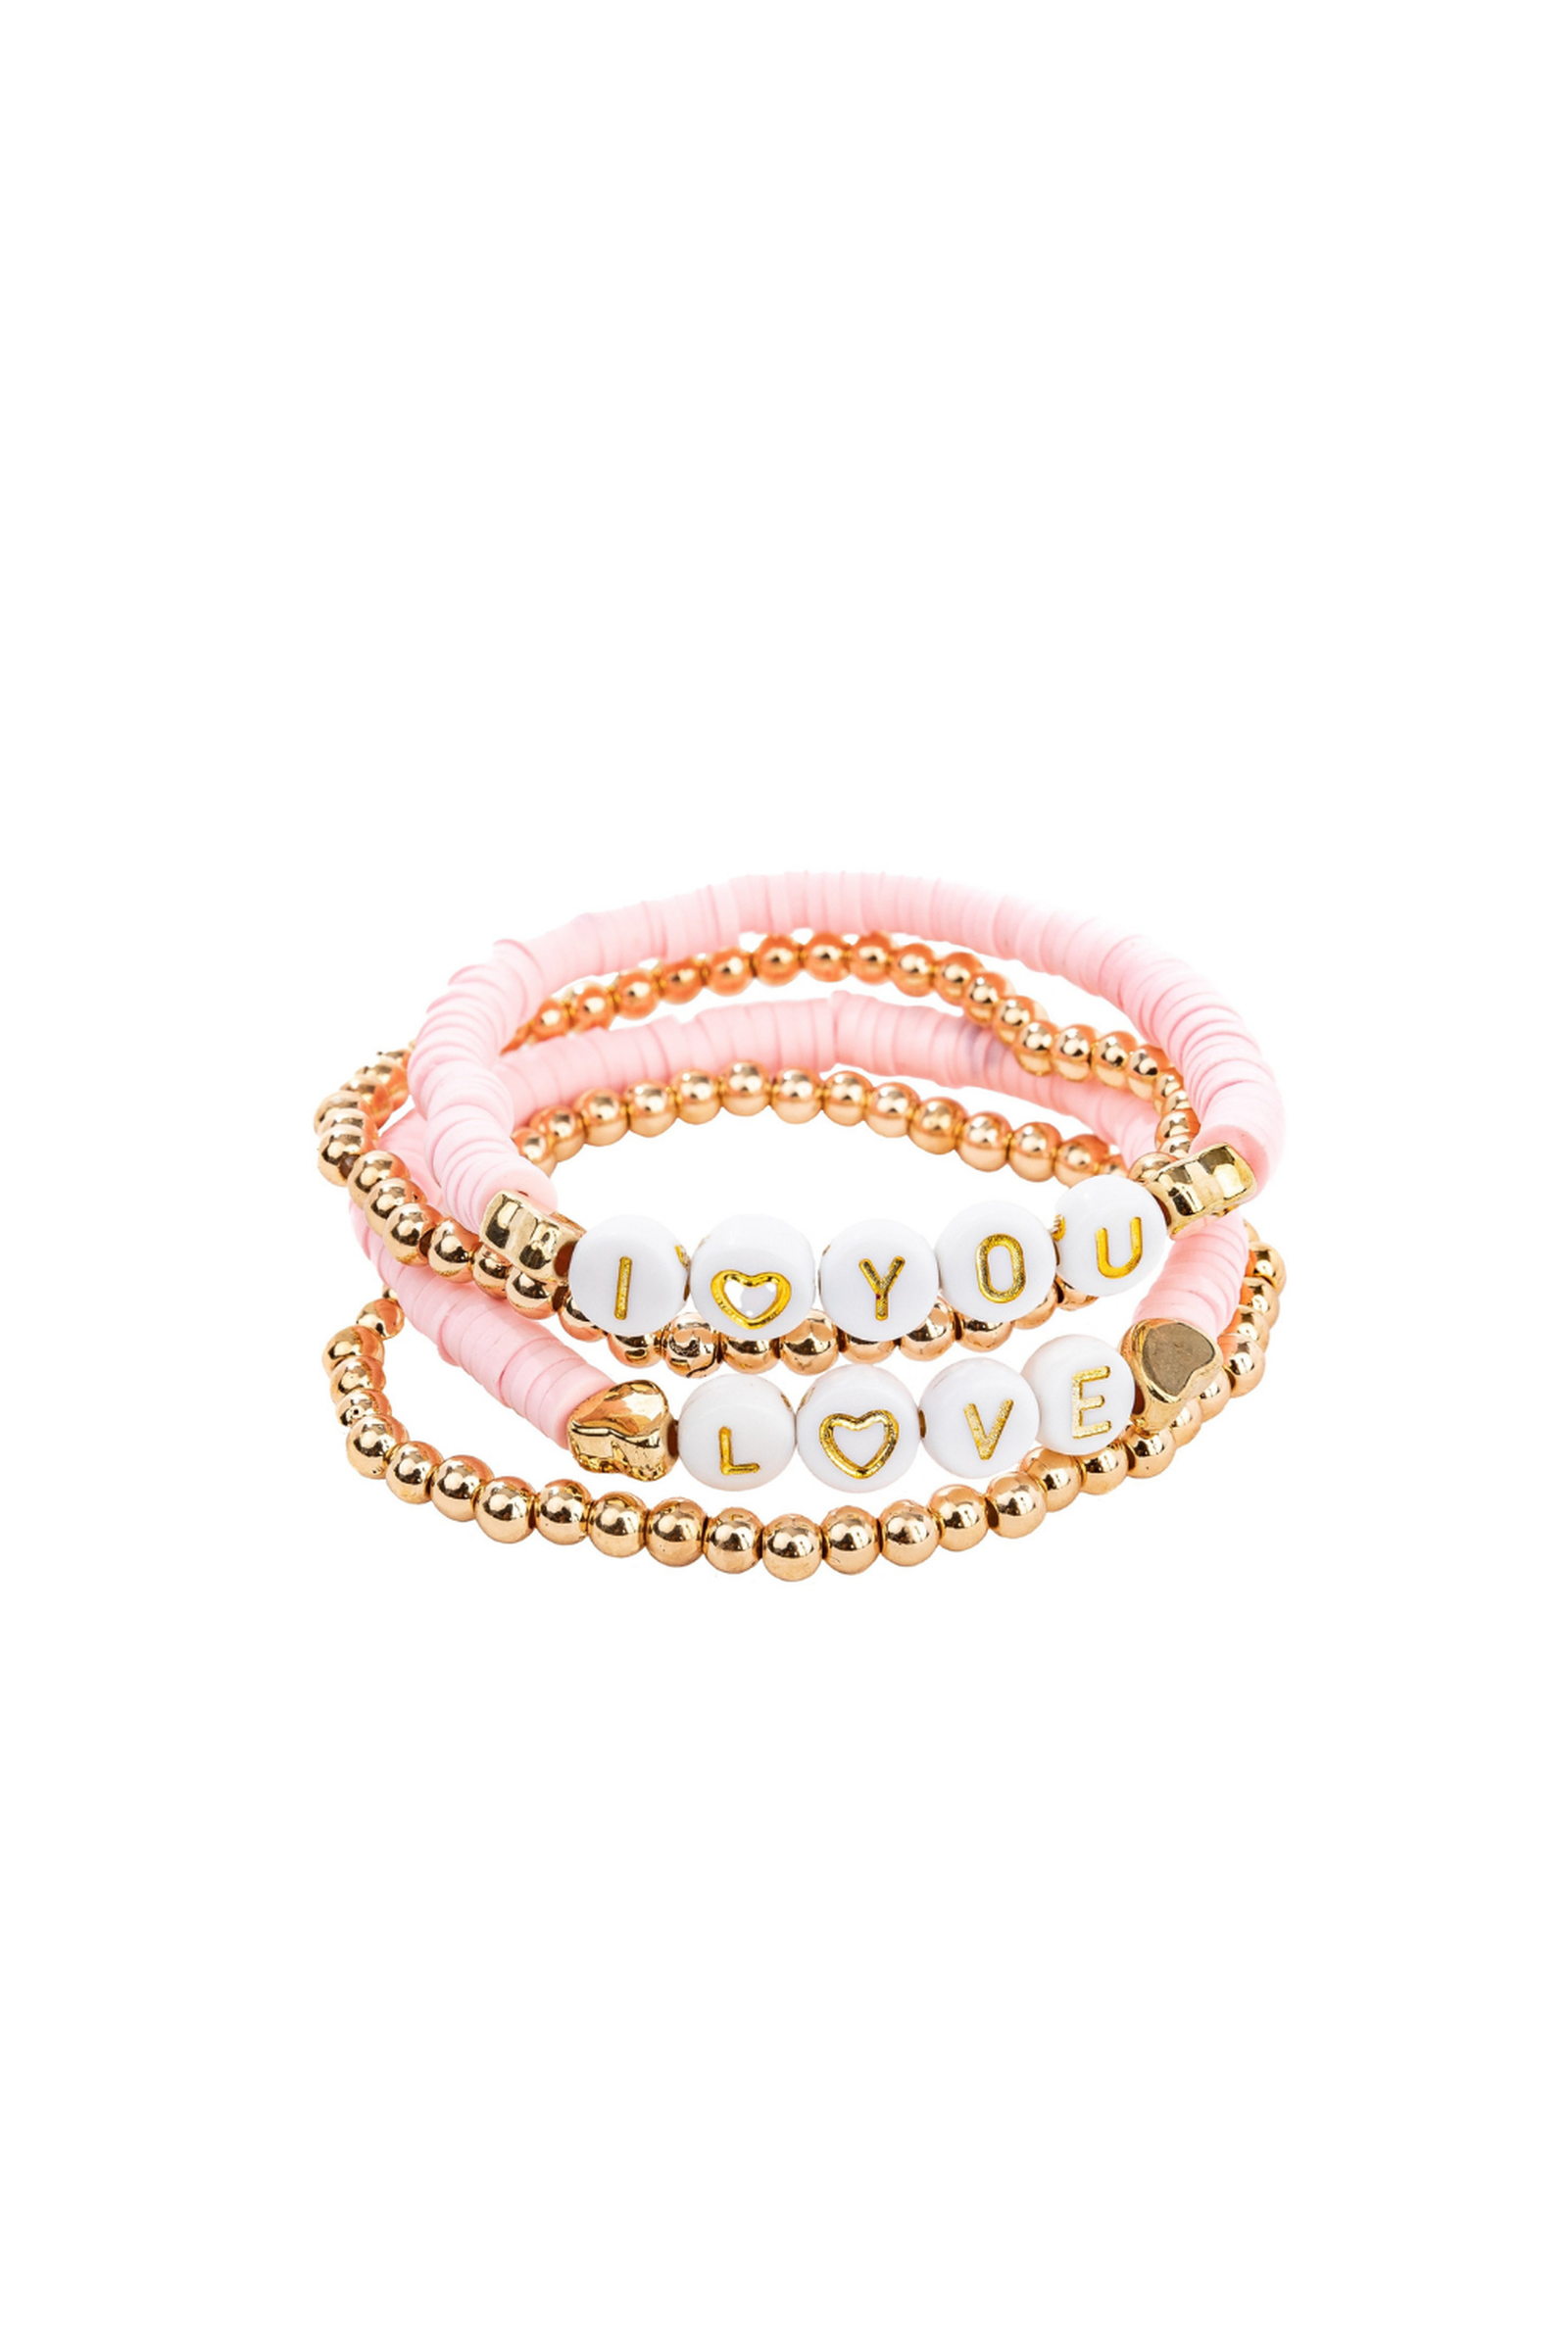 Swarovski Women's Teddy Bracelet - Pink - Bracelets